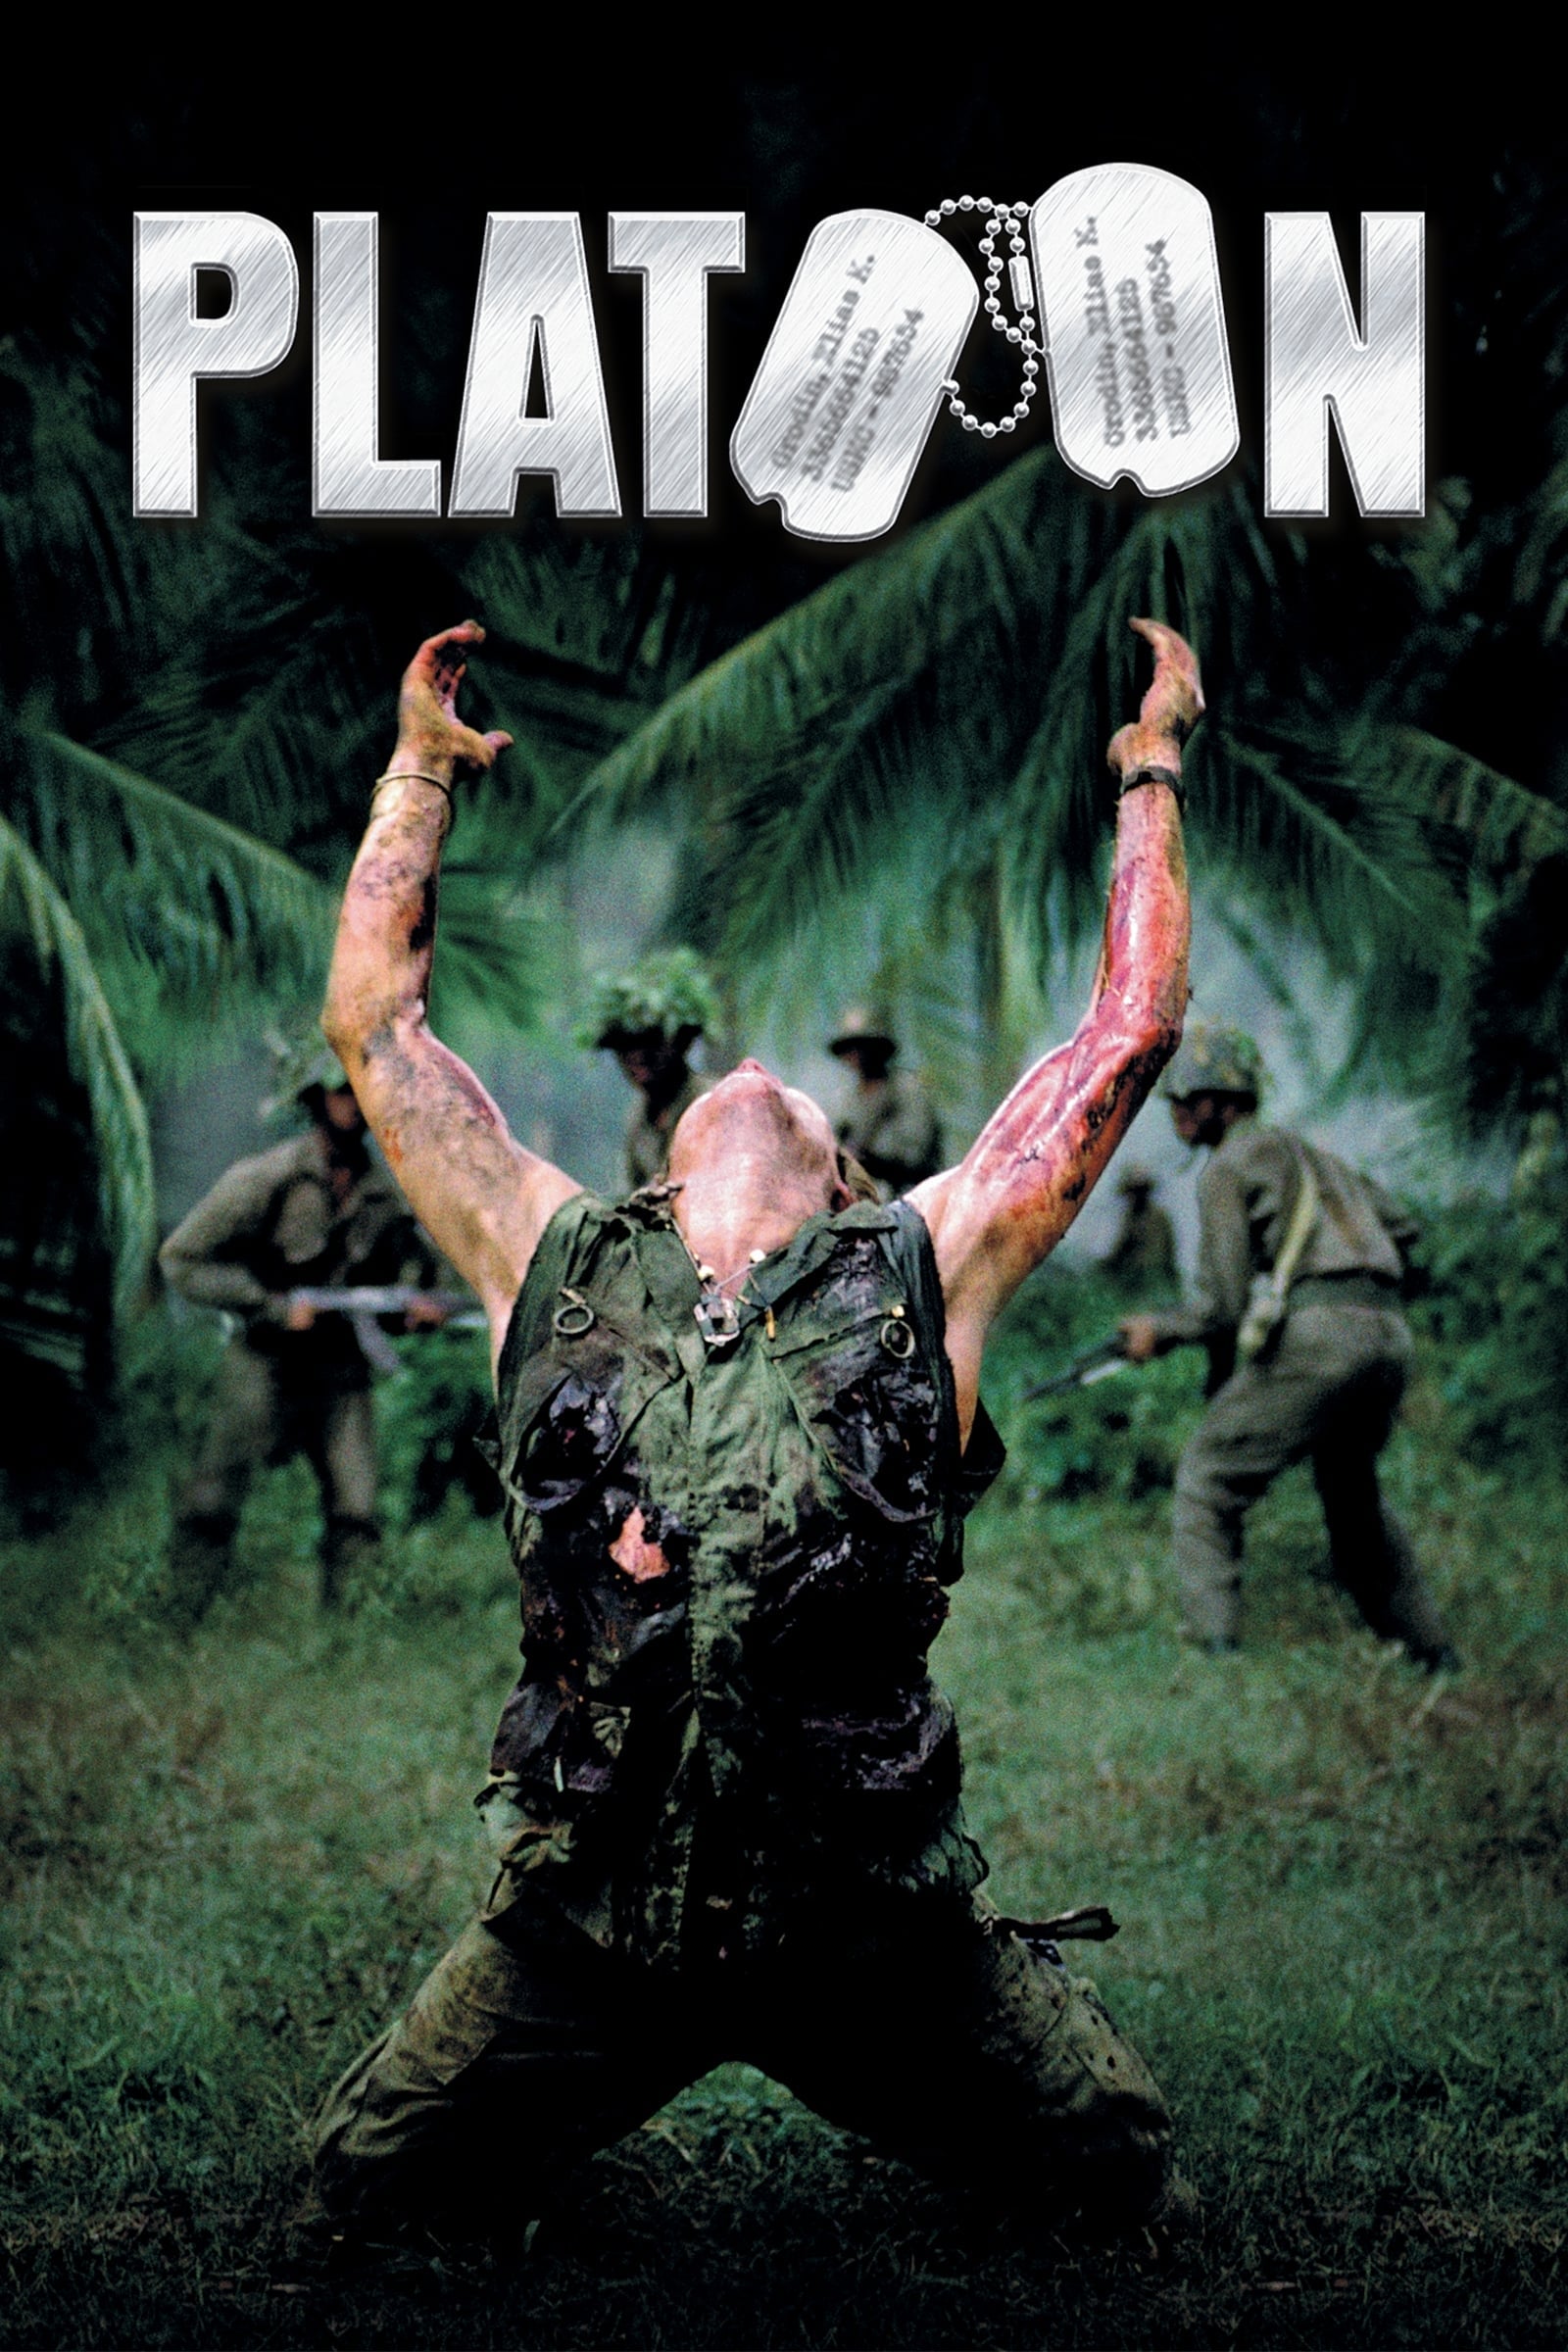 Trung Đội - Platoon (1986)